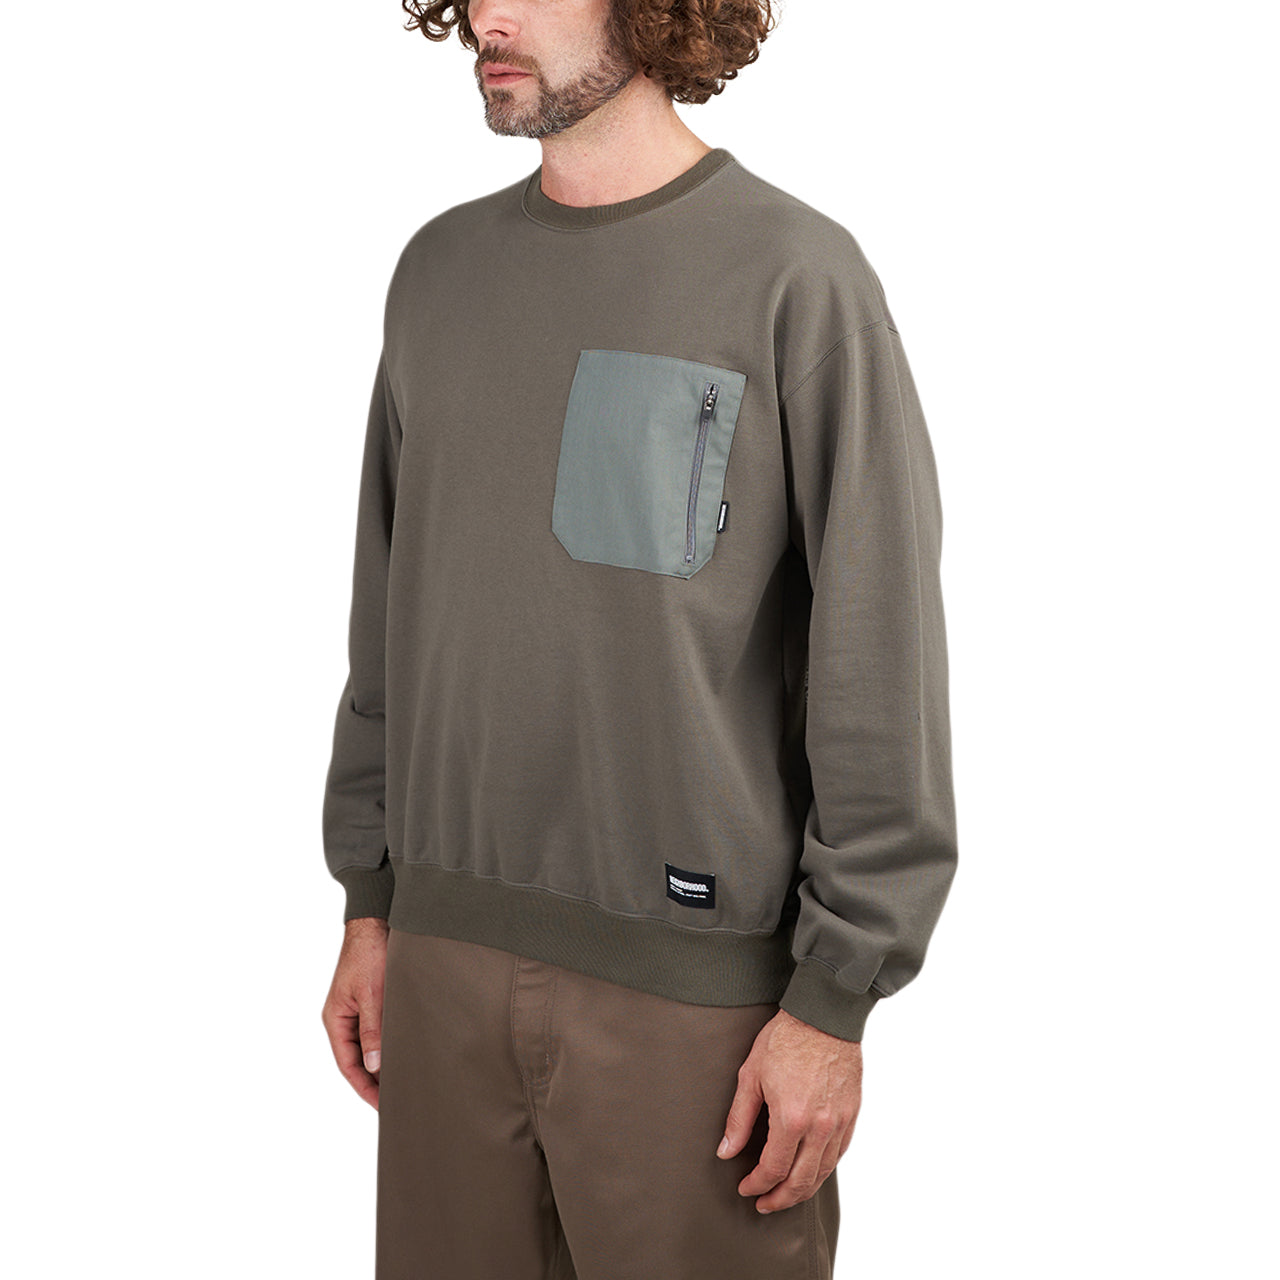 Neighborhood Design Sweatshirt LS-3 (Oliv)  - Cheap Sneakersbe Jordan Outlet